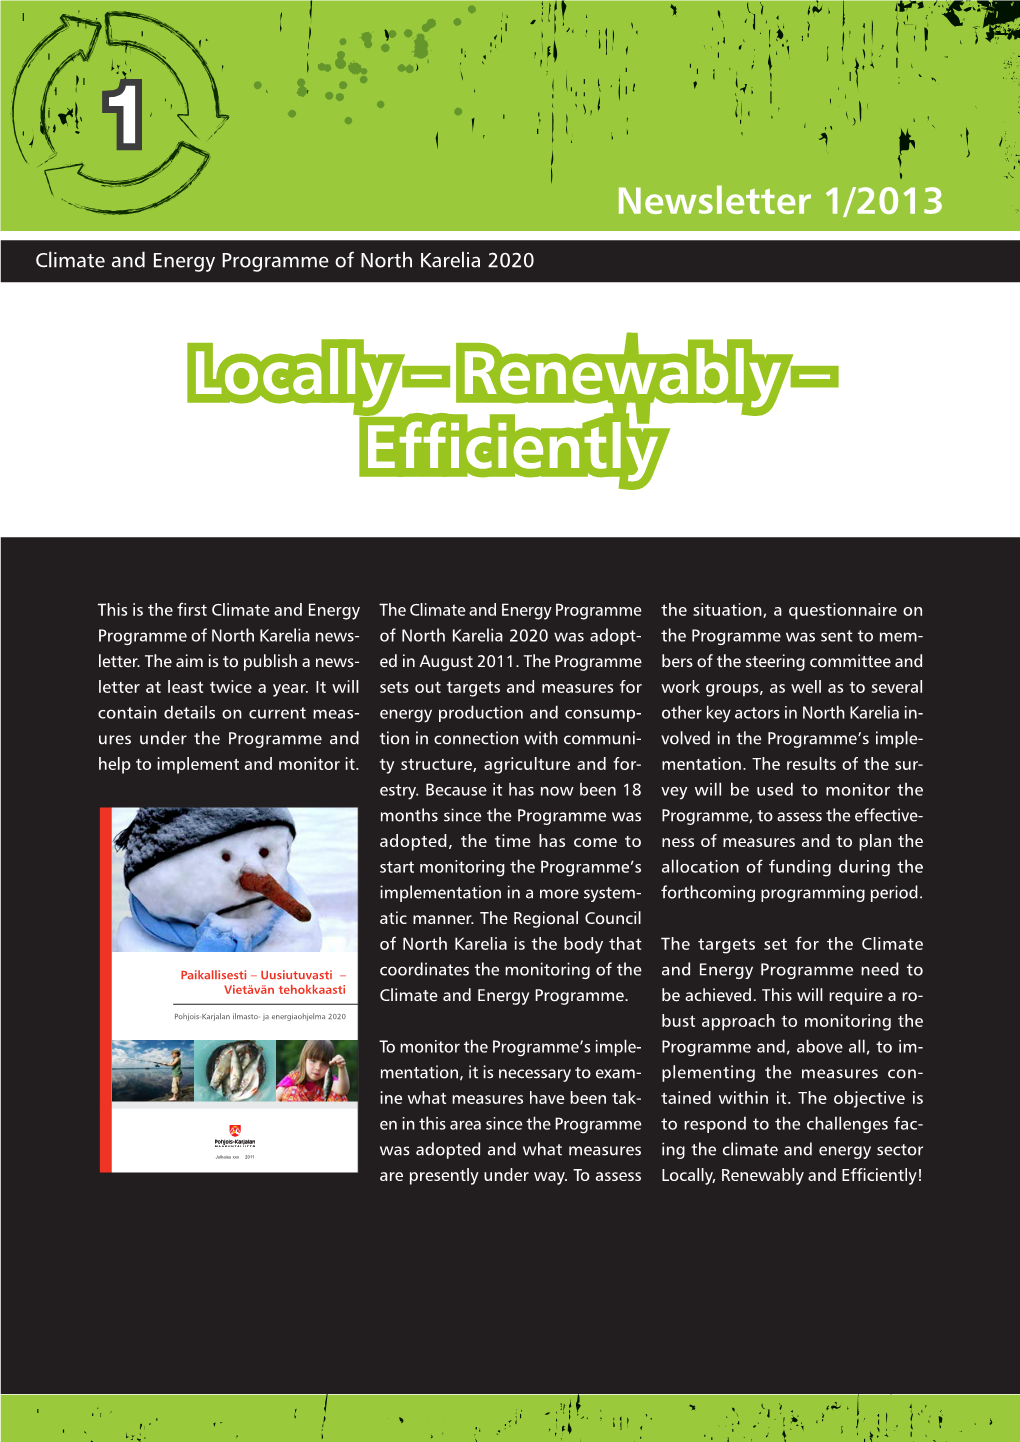 Locally – Renewably – Efficiently